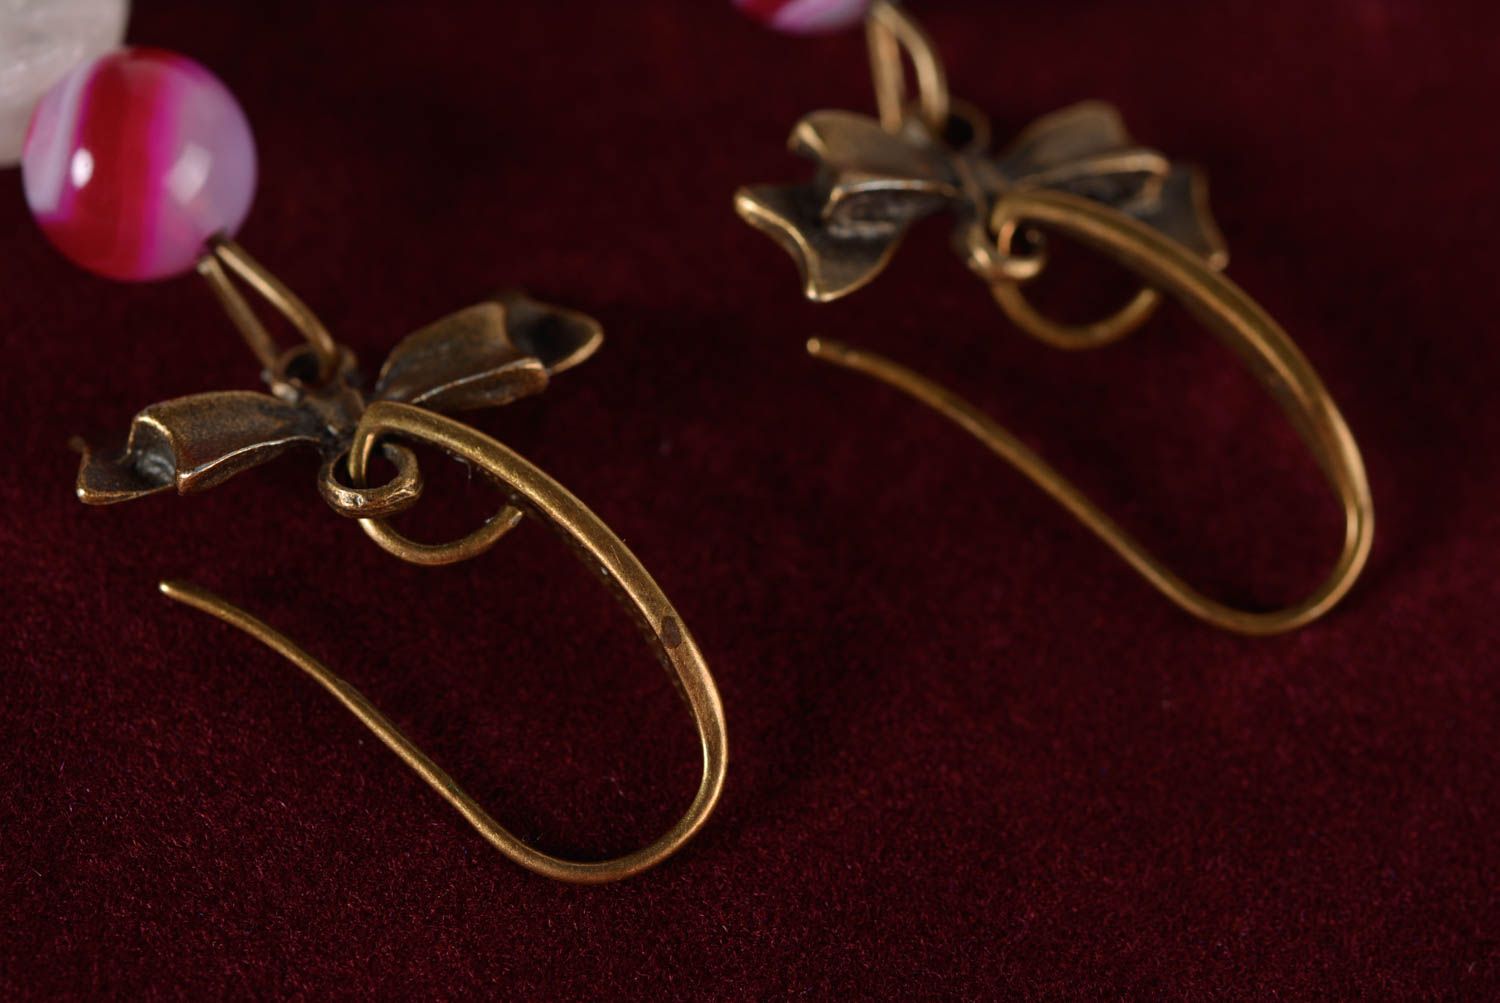 Handmade earrings stone jewelry fashion accessories dangling earrings cool gifts photo 5